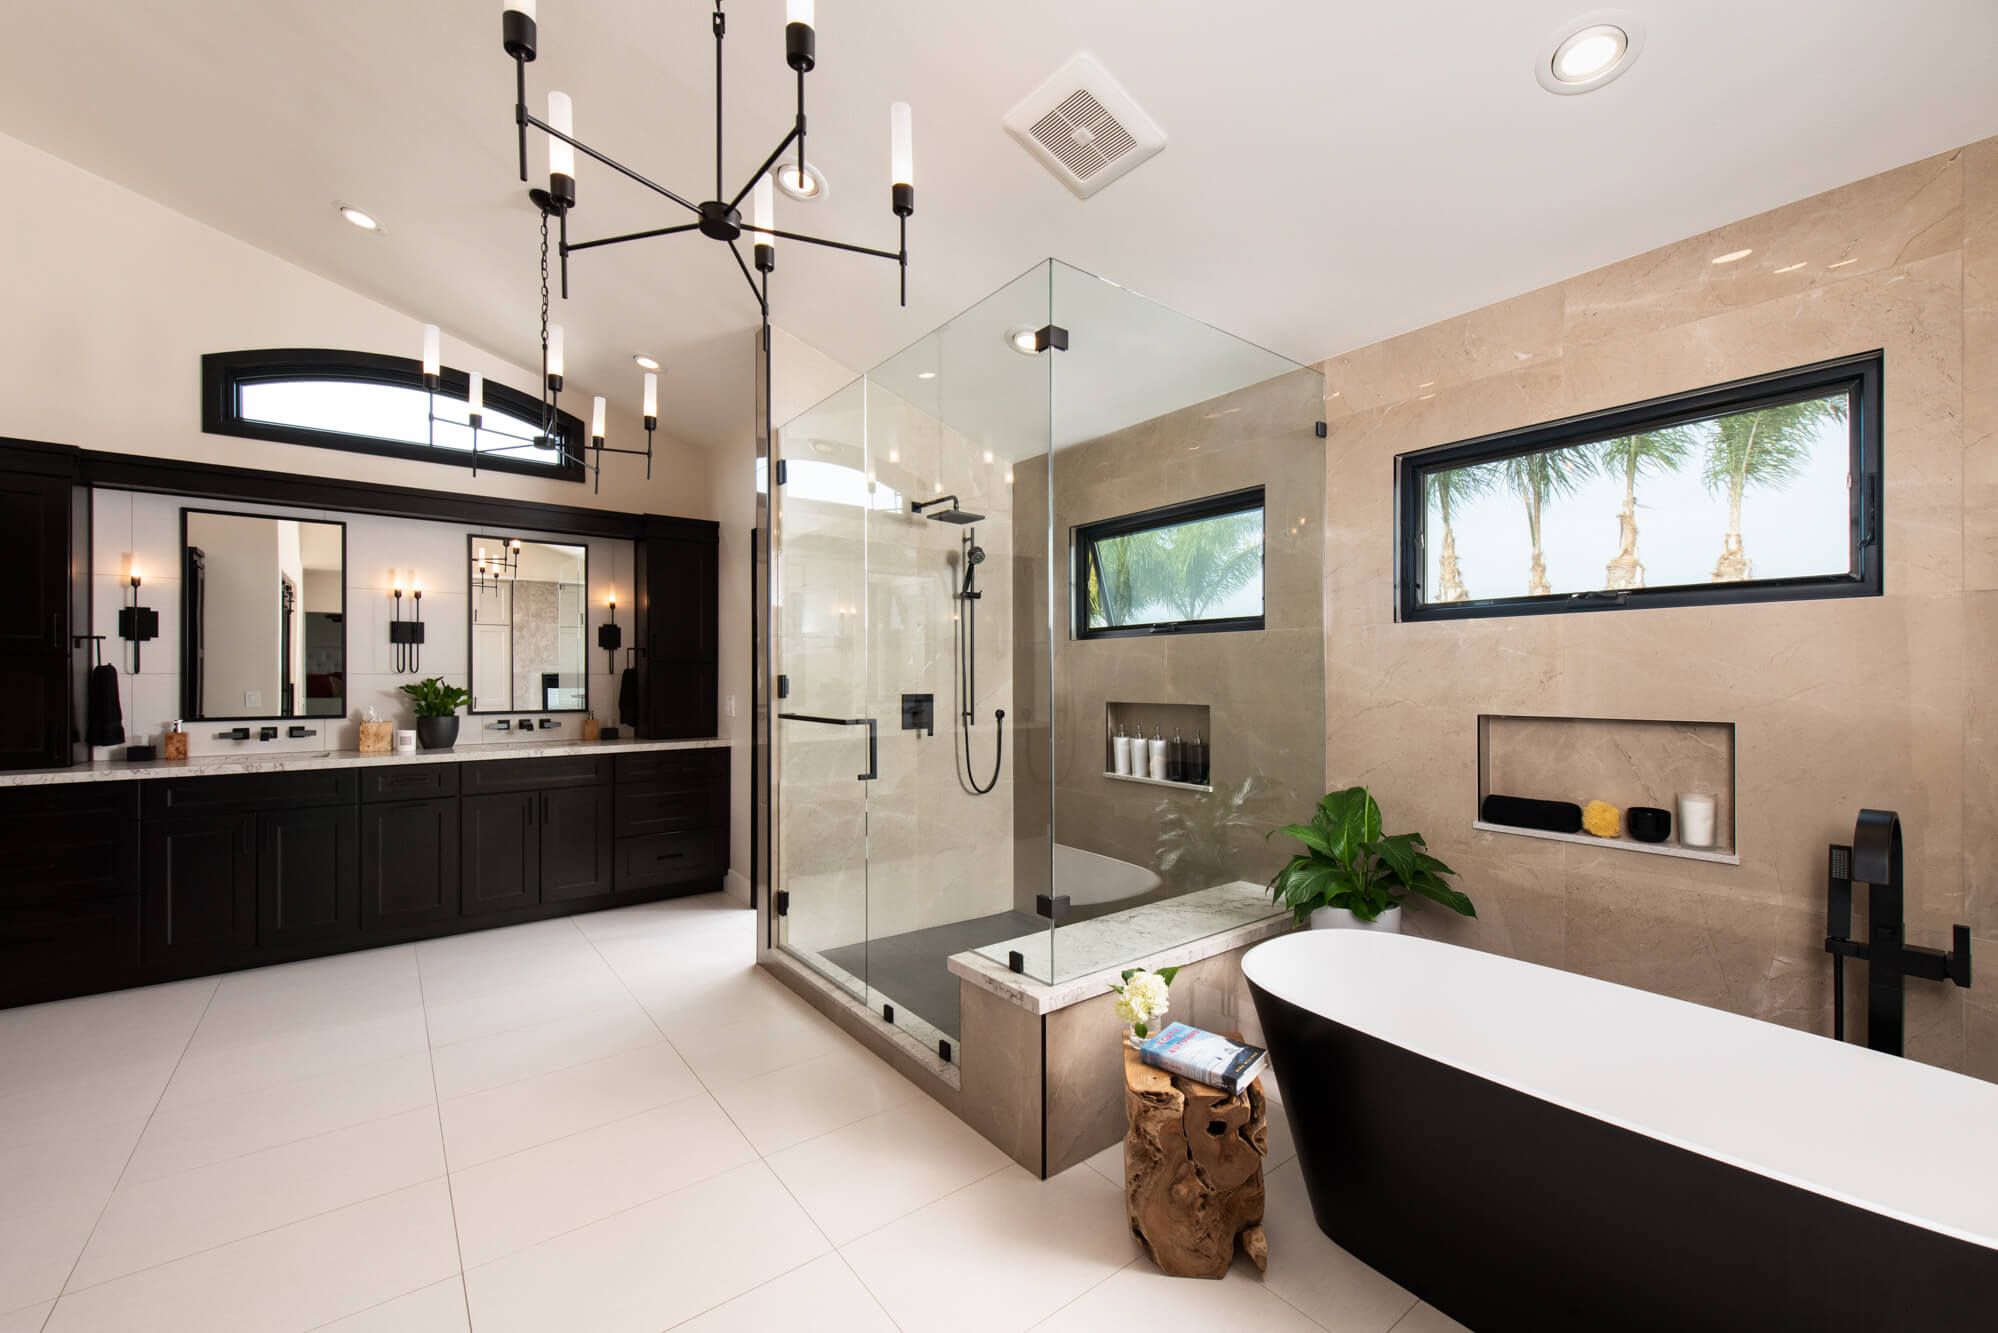 Anaheim Hills bathroom remodel